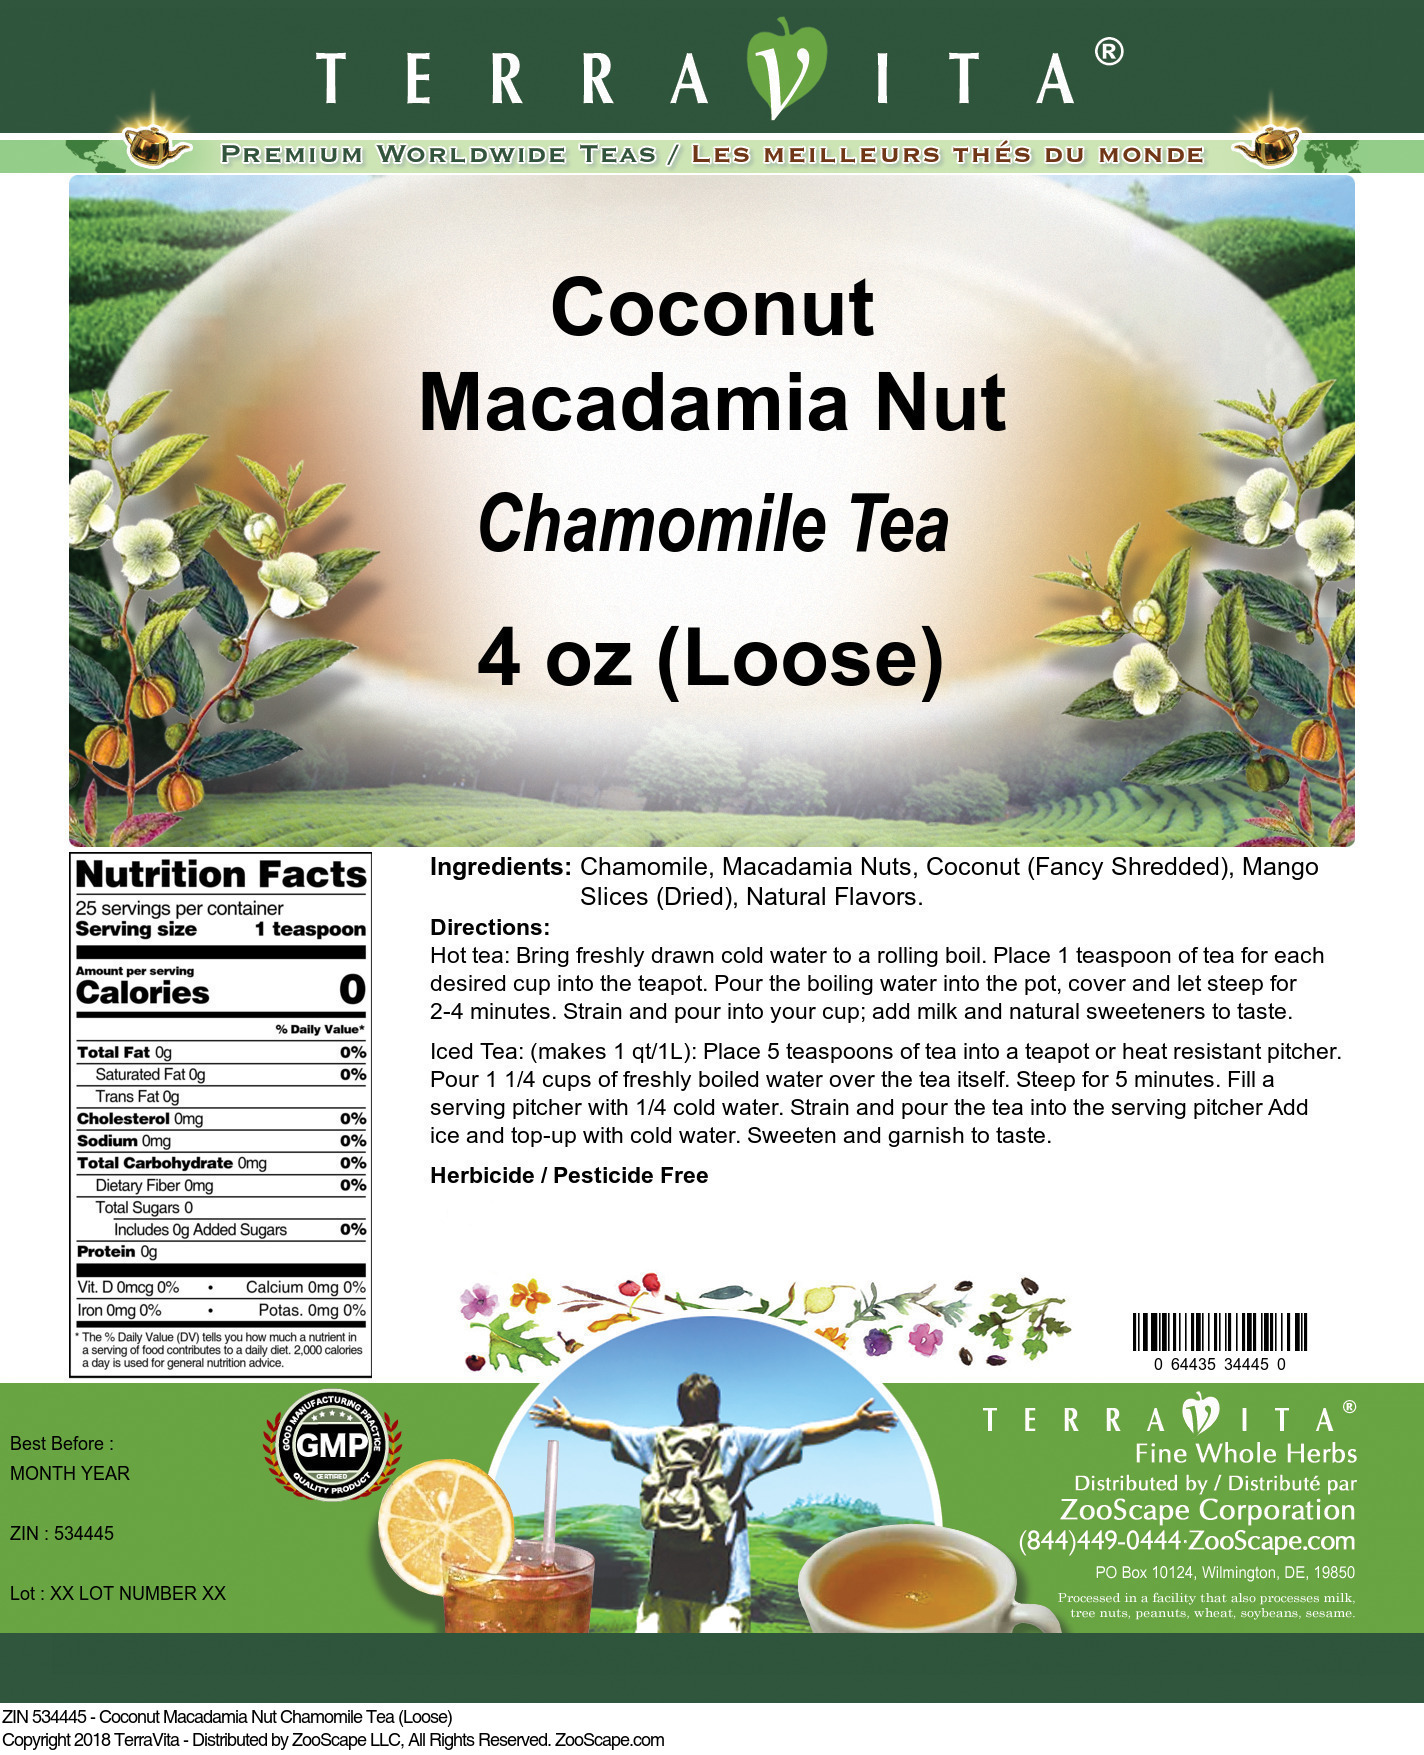 Coconut Macadamia Nut Chamomile Tea (Loose) - Label